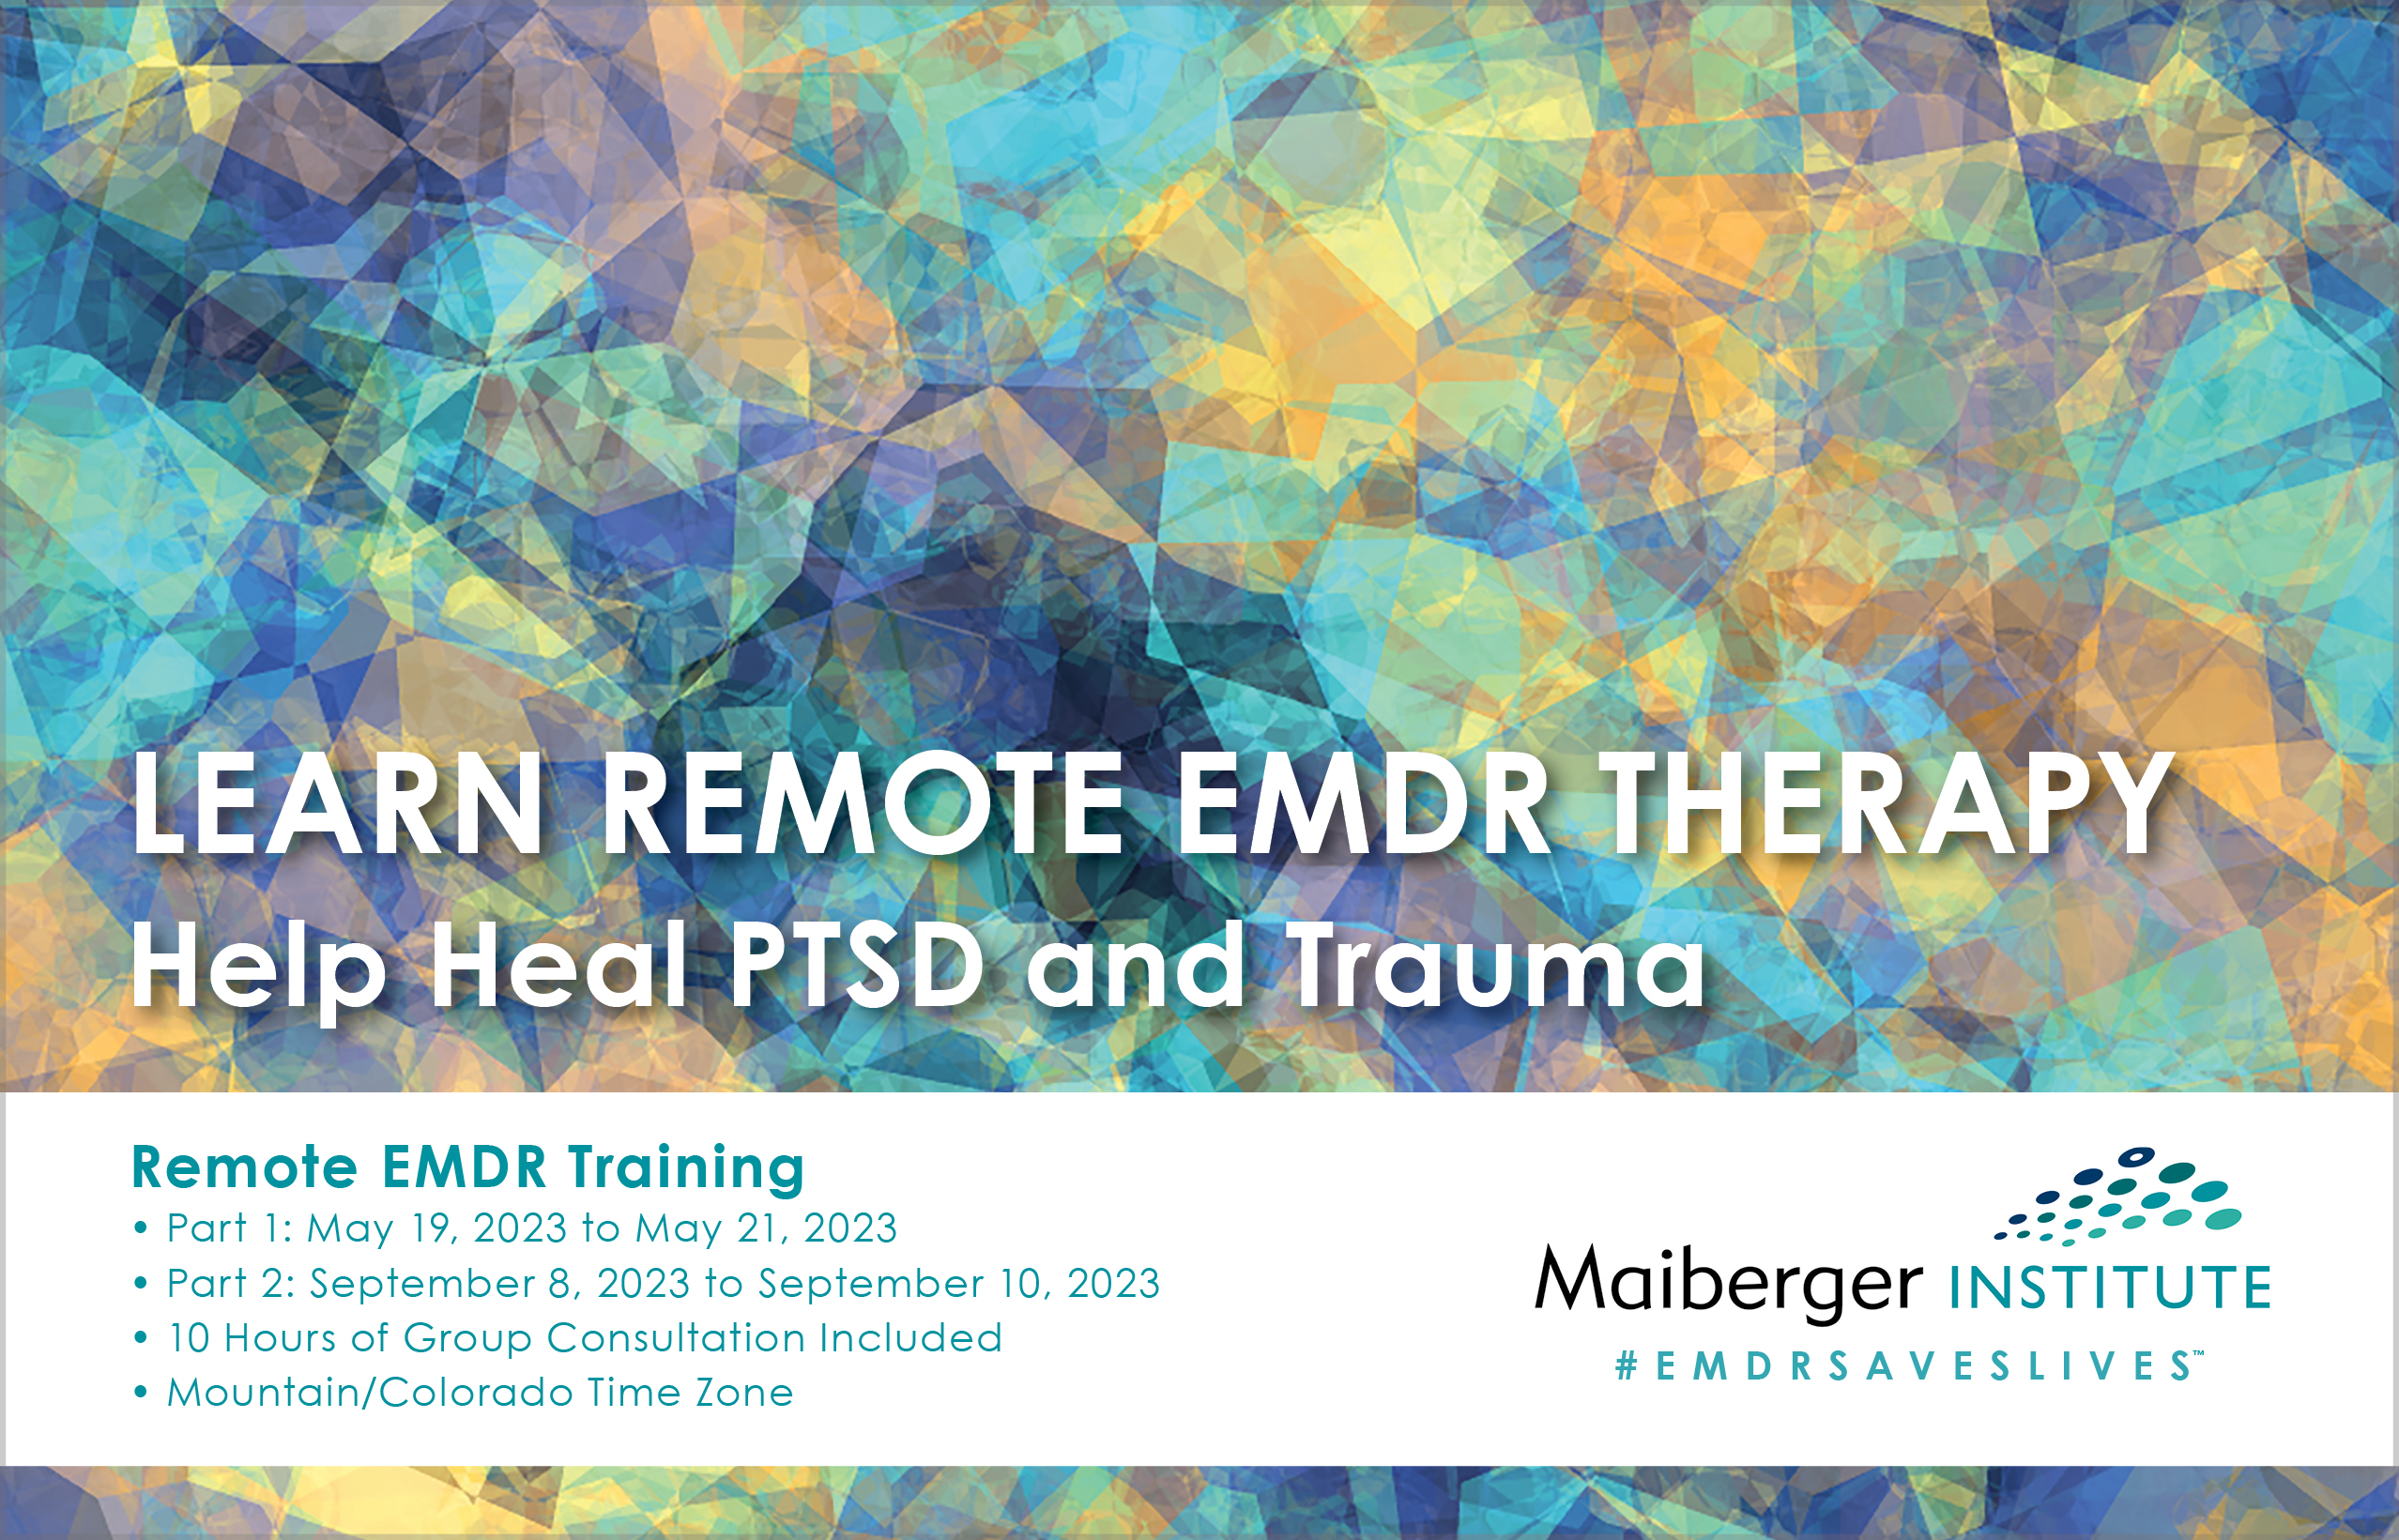 Remote EMDR Training Course - May 2023 September 2023 - EMDR Training Schedule - Maiberger Institute - EMDRSAVESLIVES